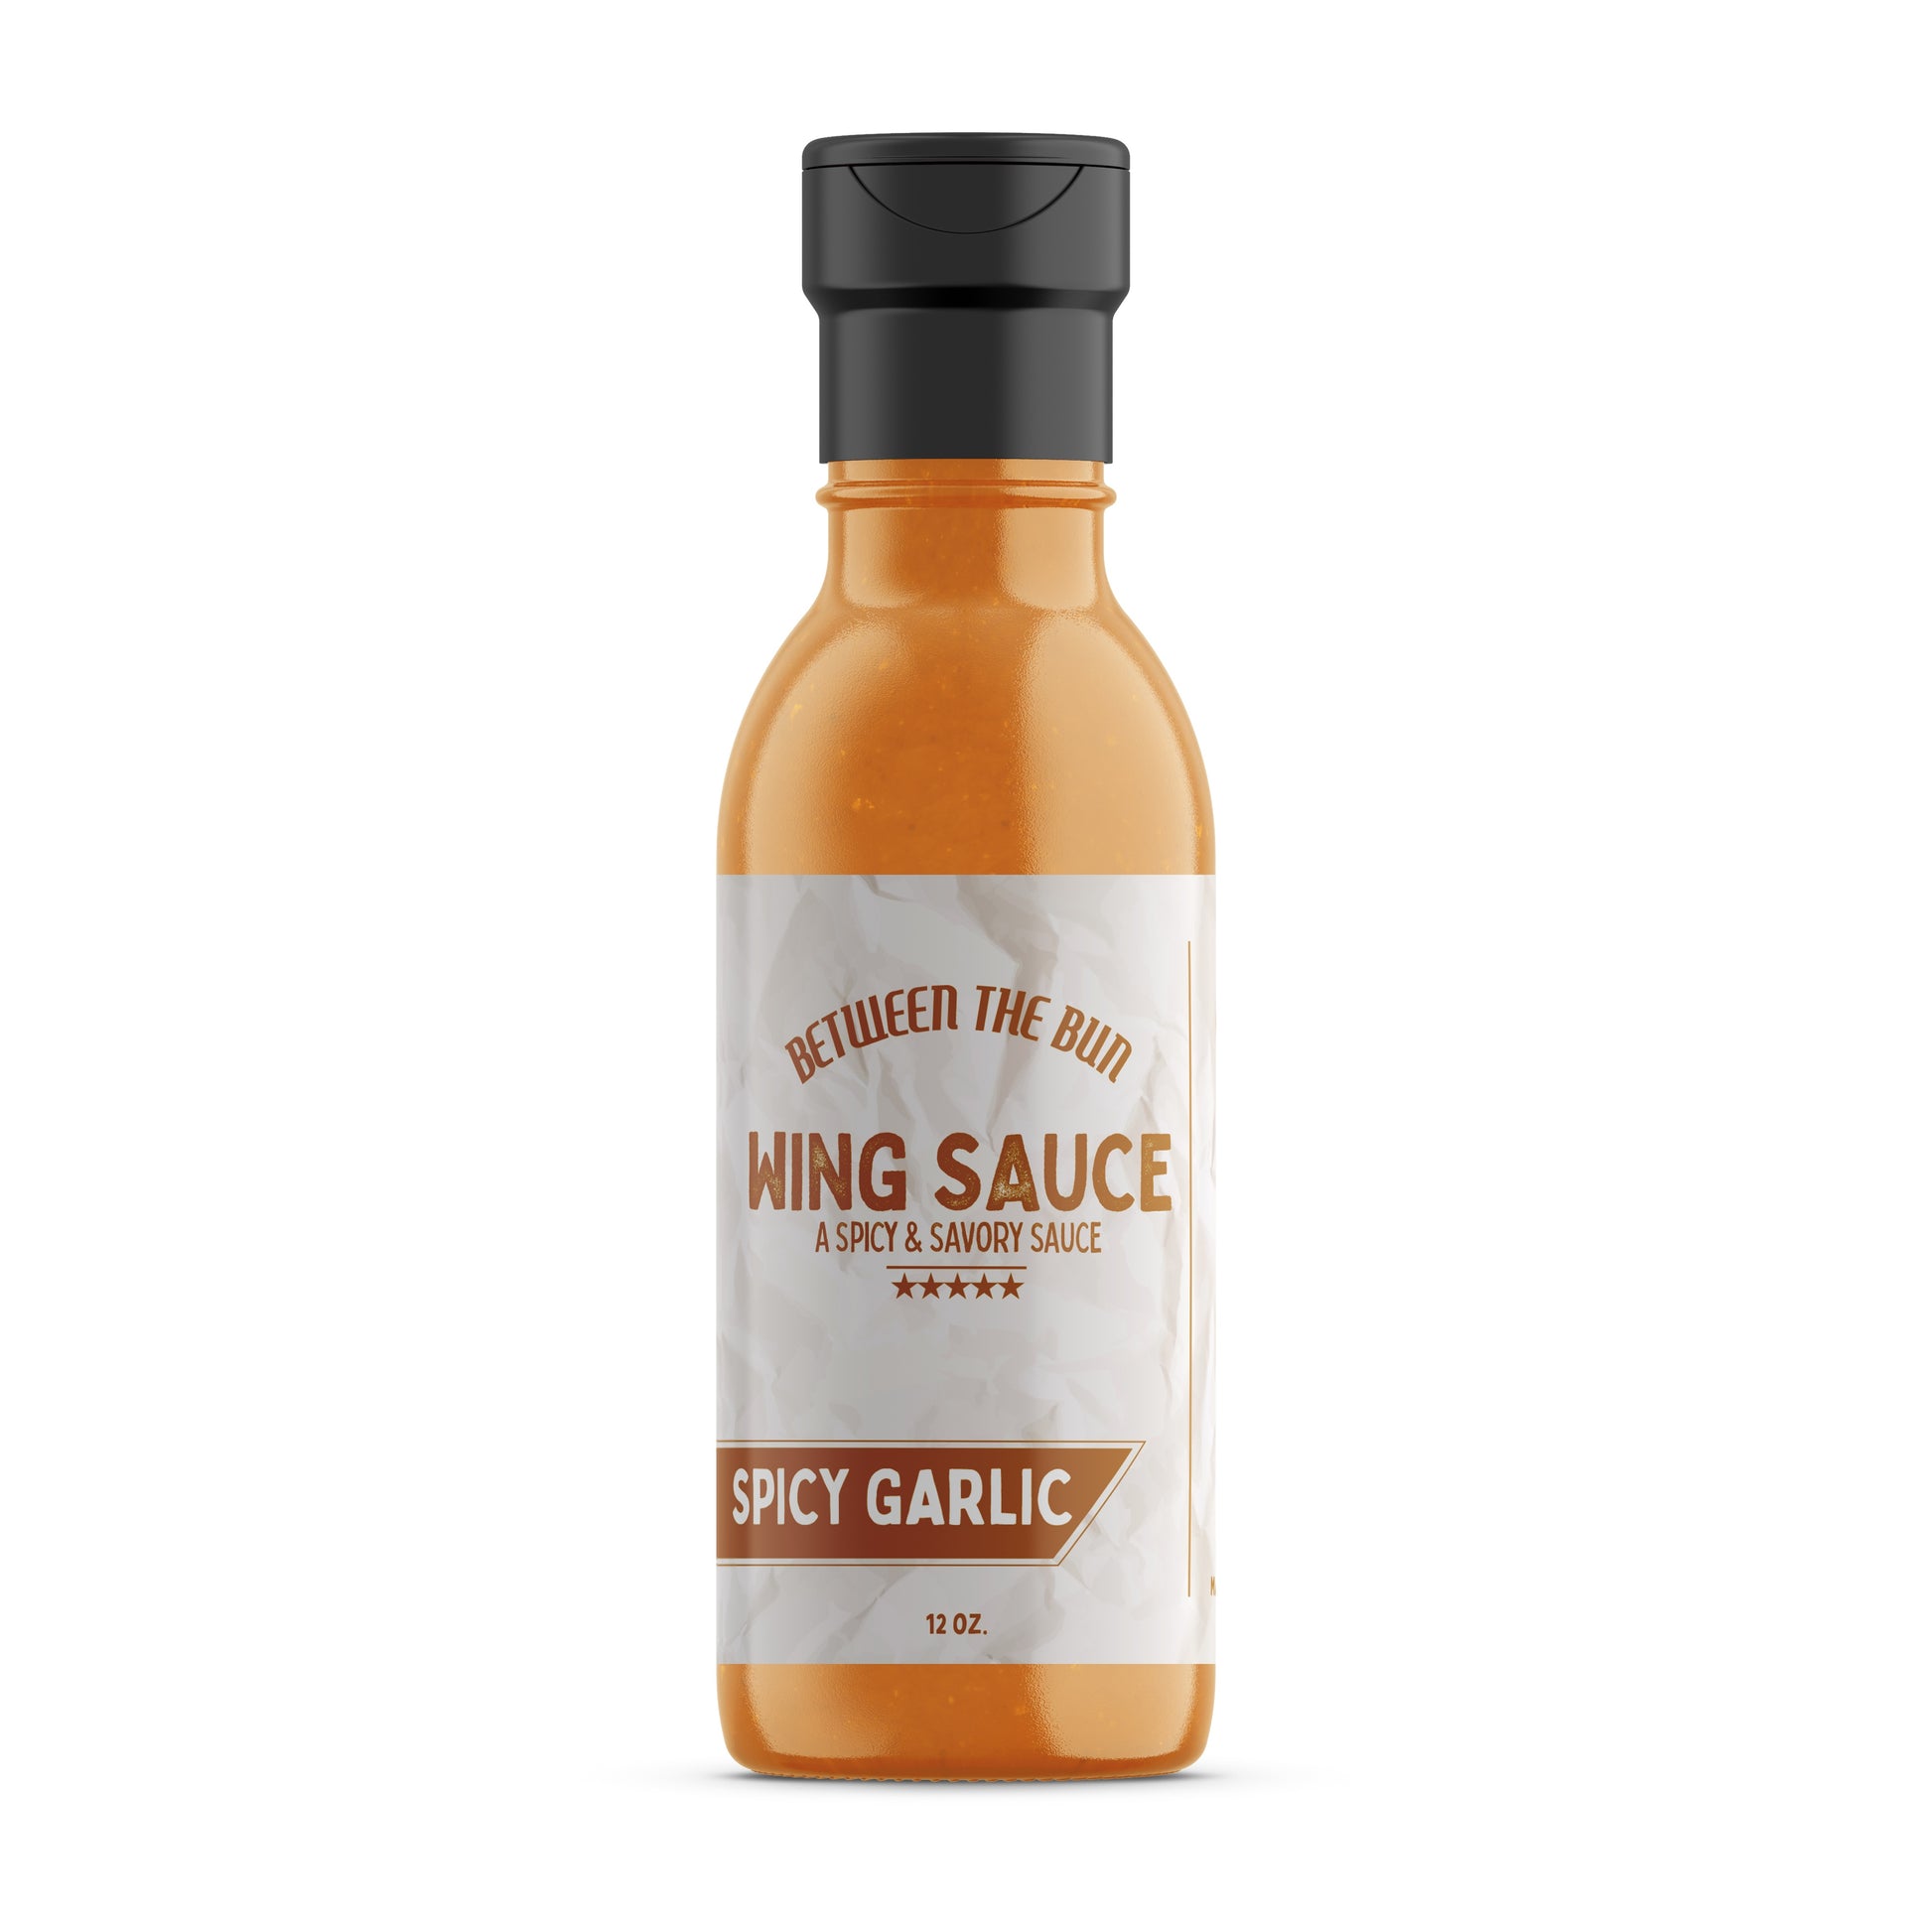 Spicy garlic wing sauce